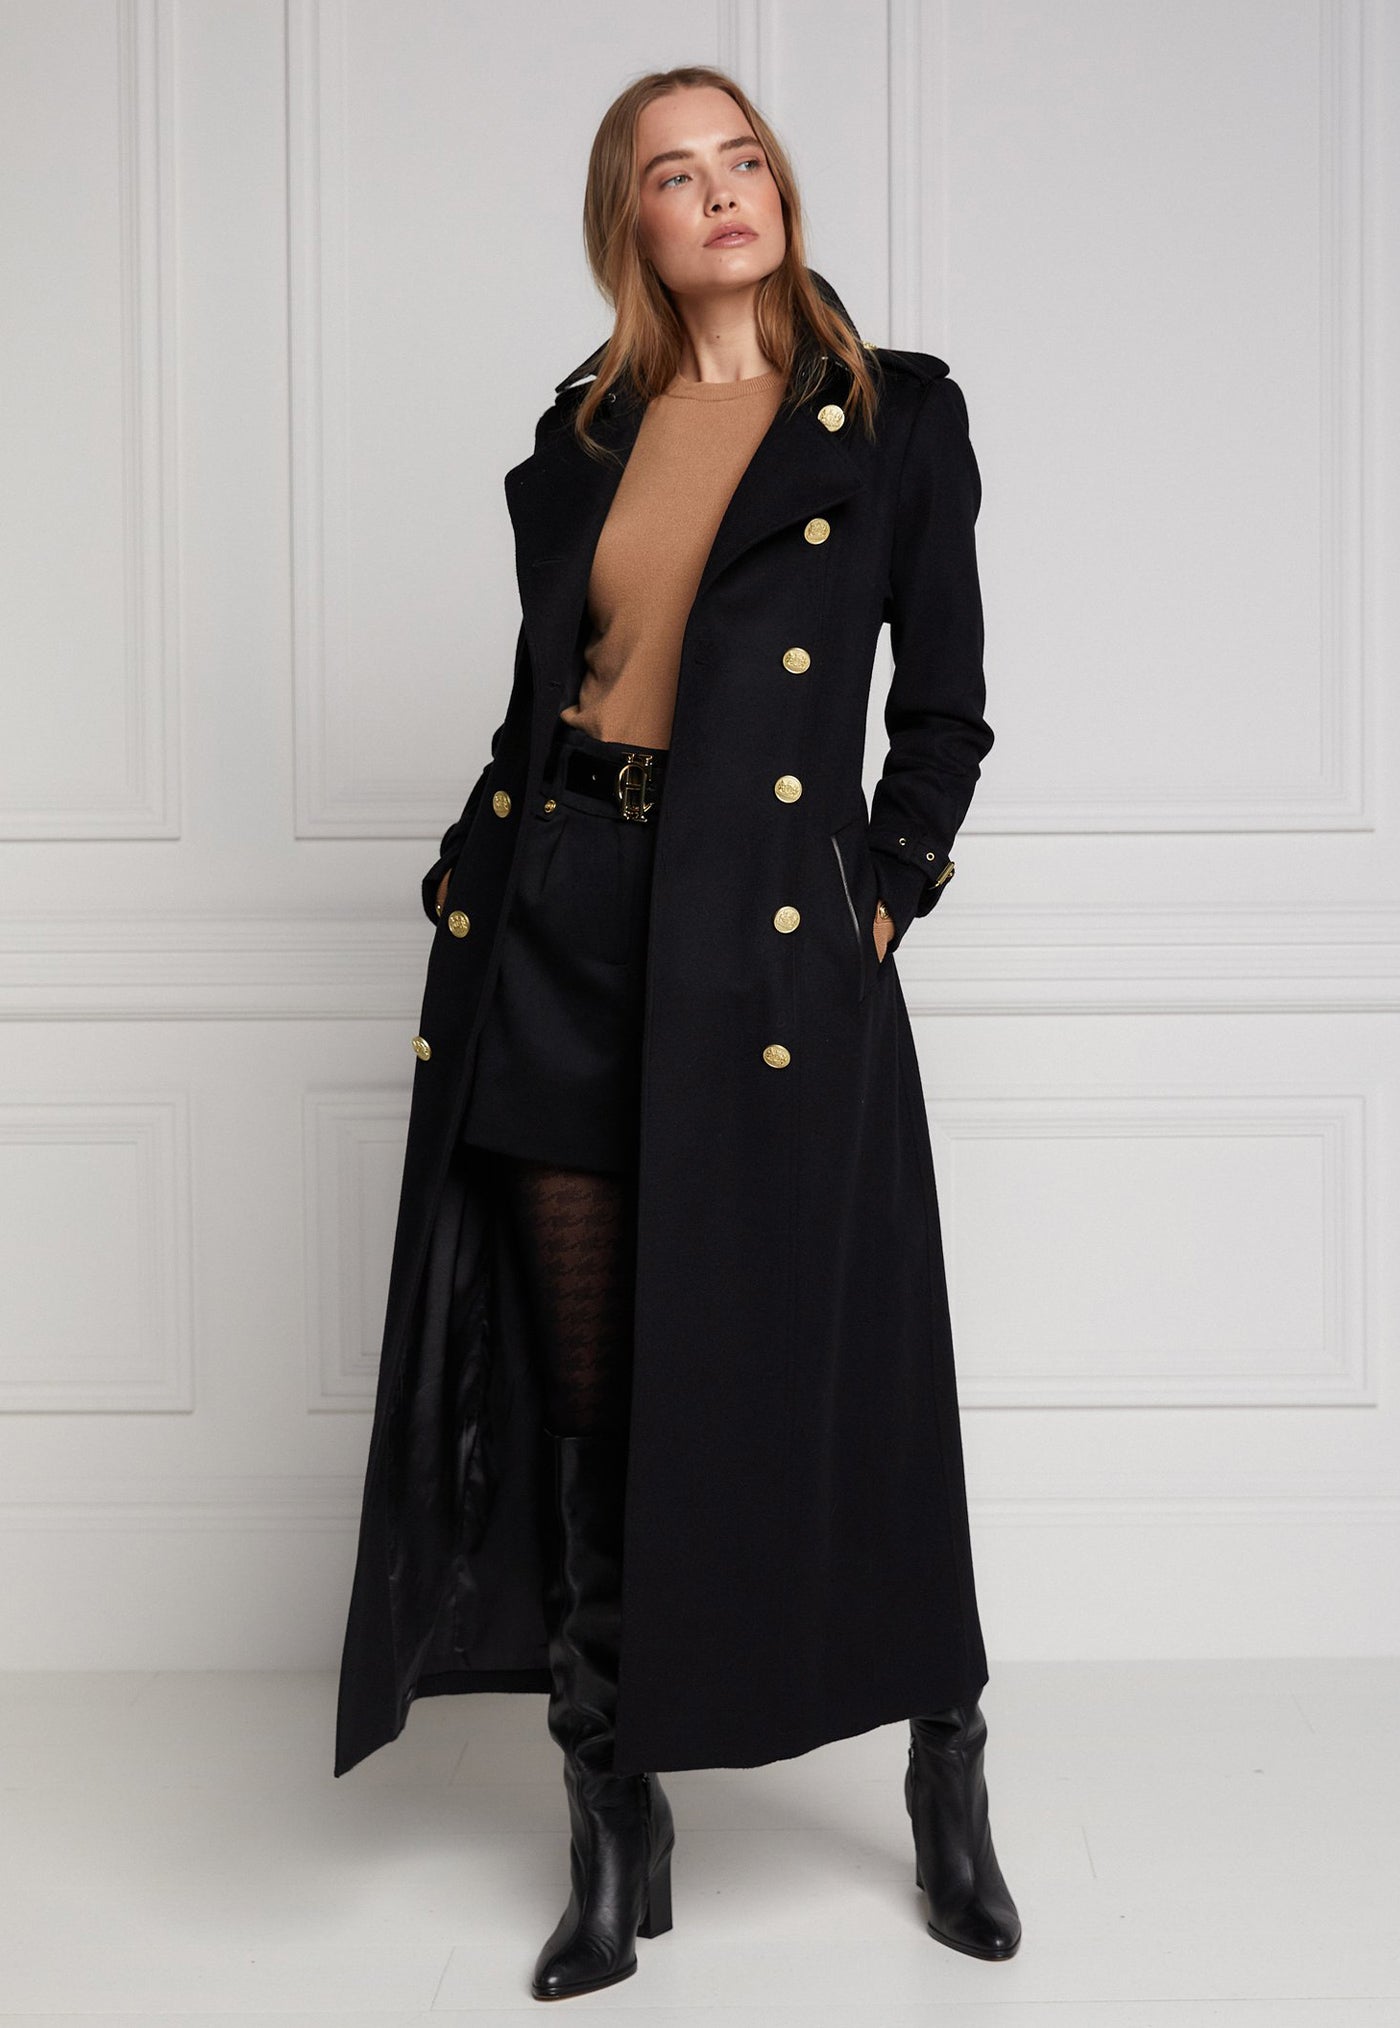 Marlborough Trench Coat Full Length - Soft Black sold by Angel Divine